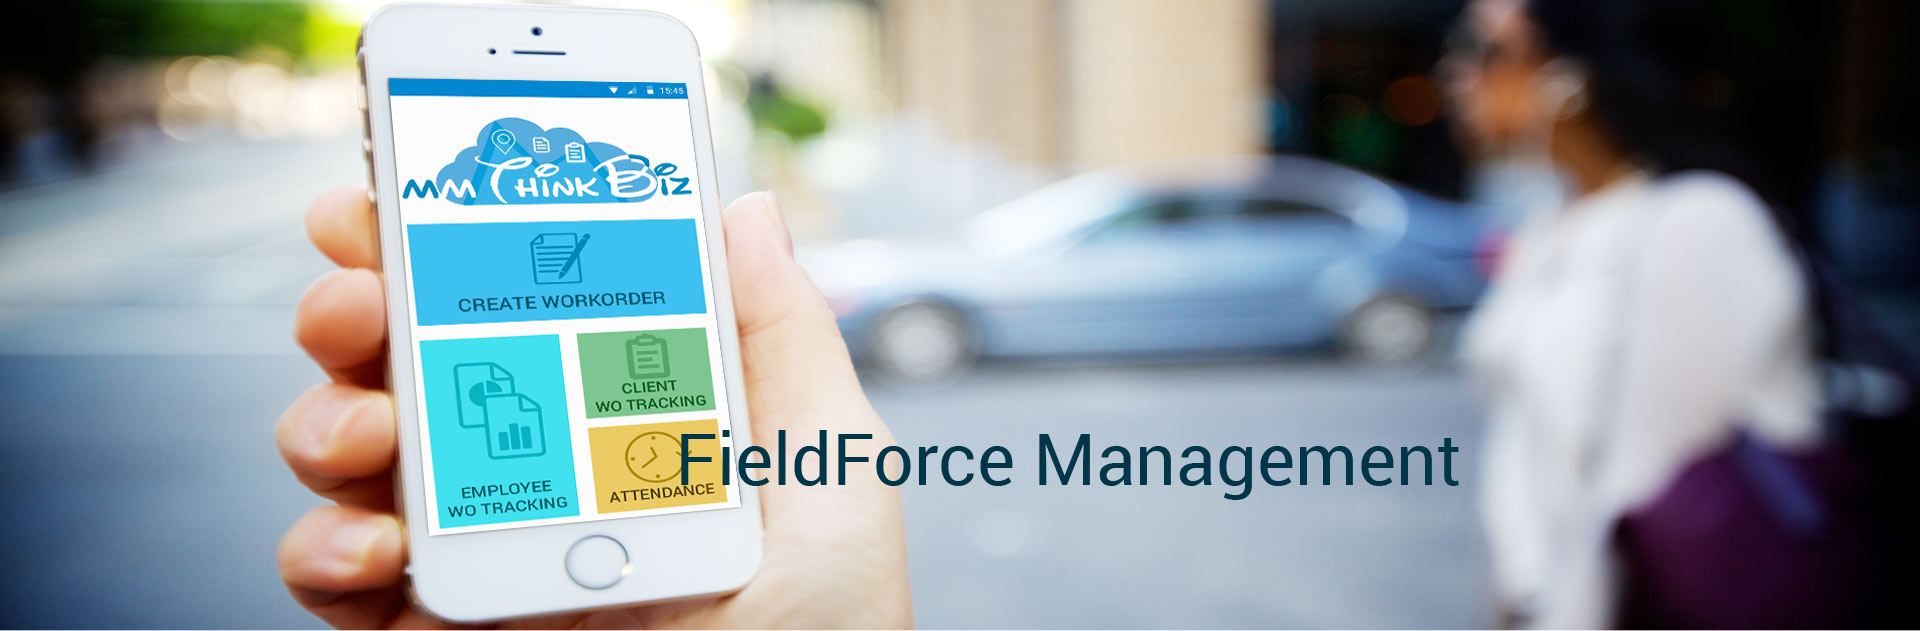 FieldForce Management